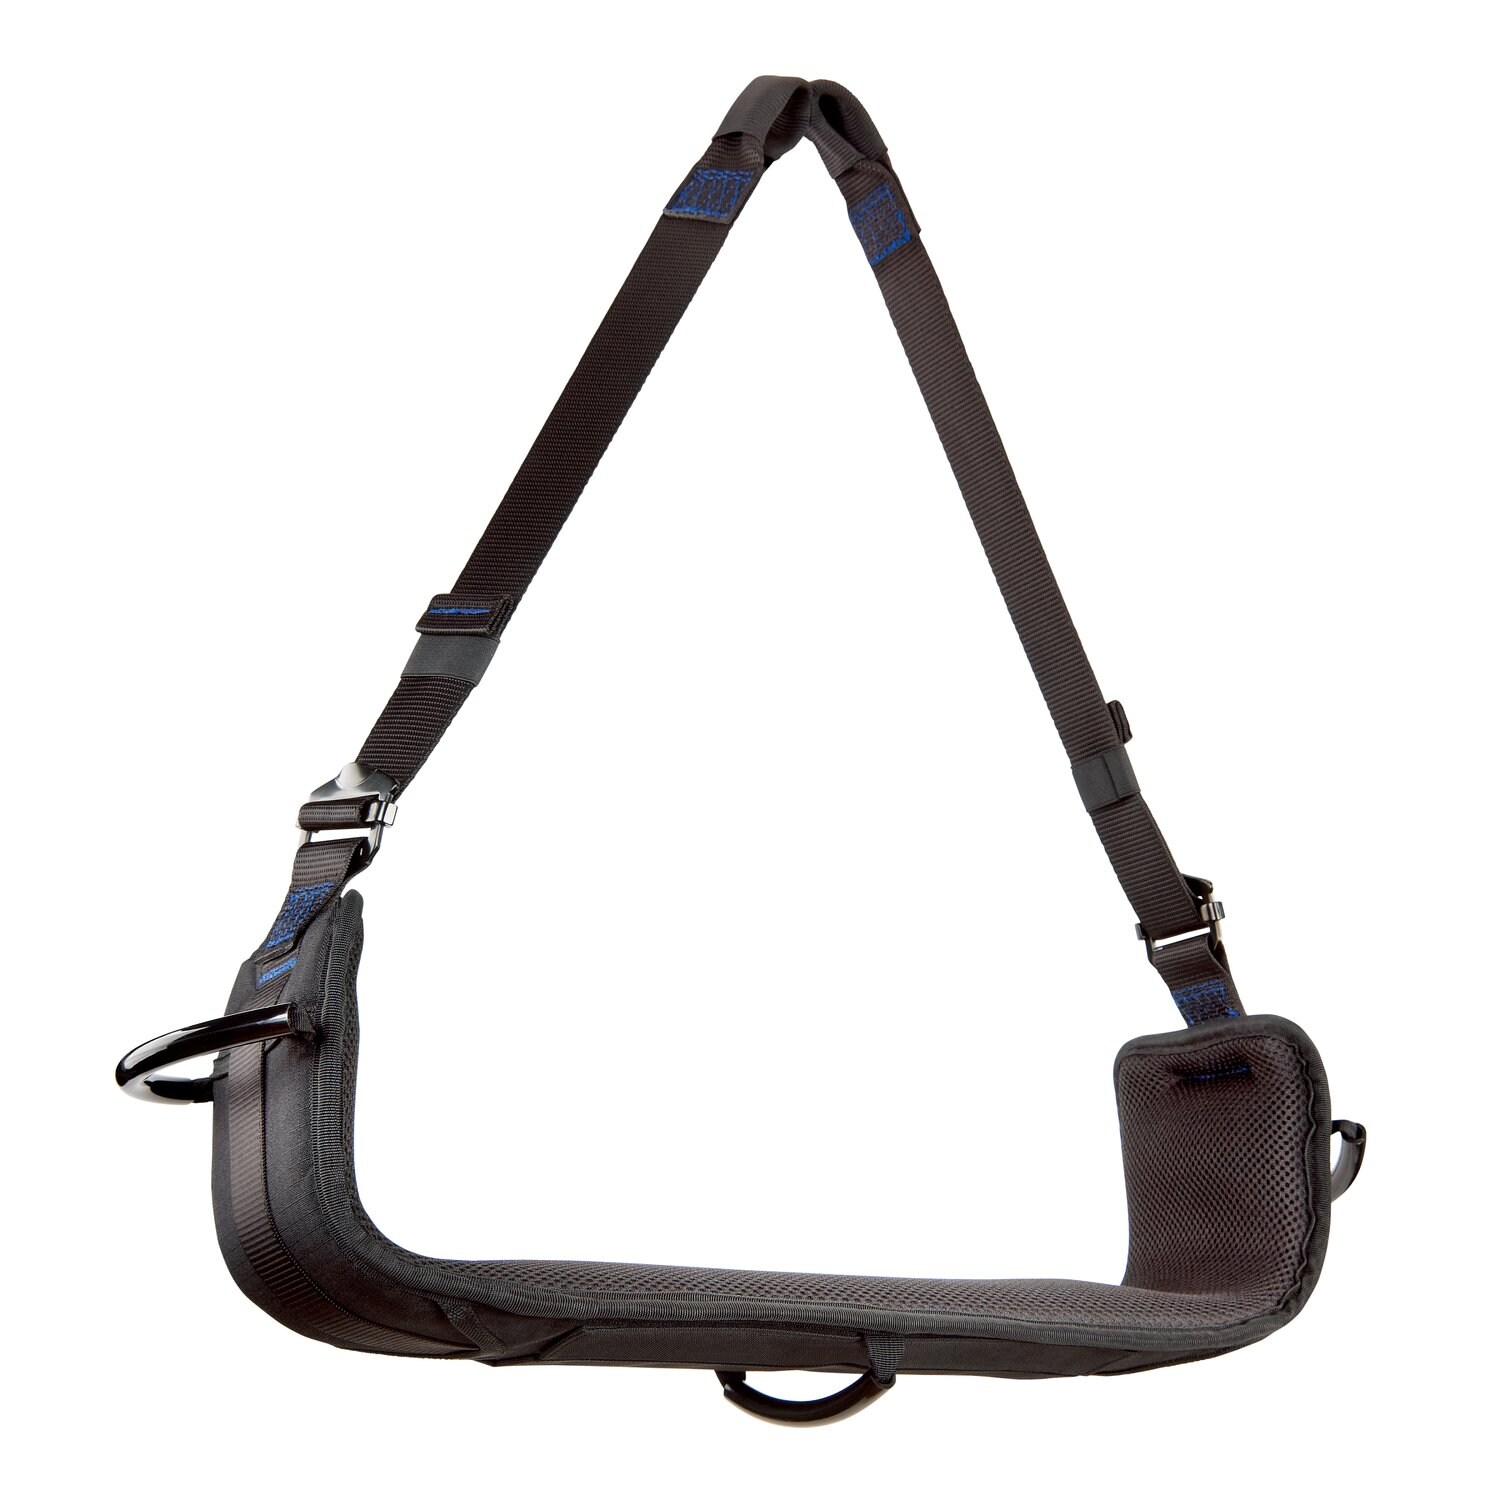 7100309978 - 3M DBI-SALA ExoFit NEX Comfort Suspension Safety Harness Seat Sling
1150414